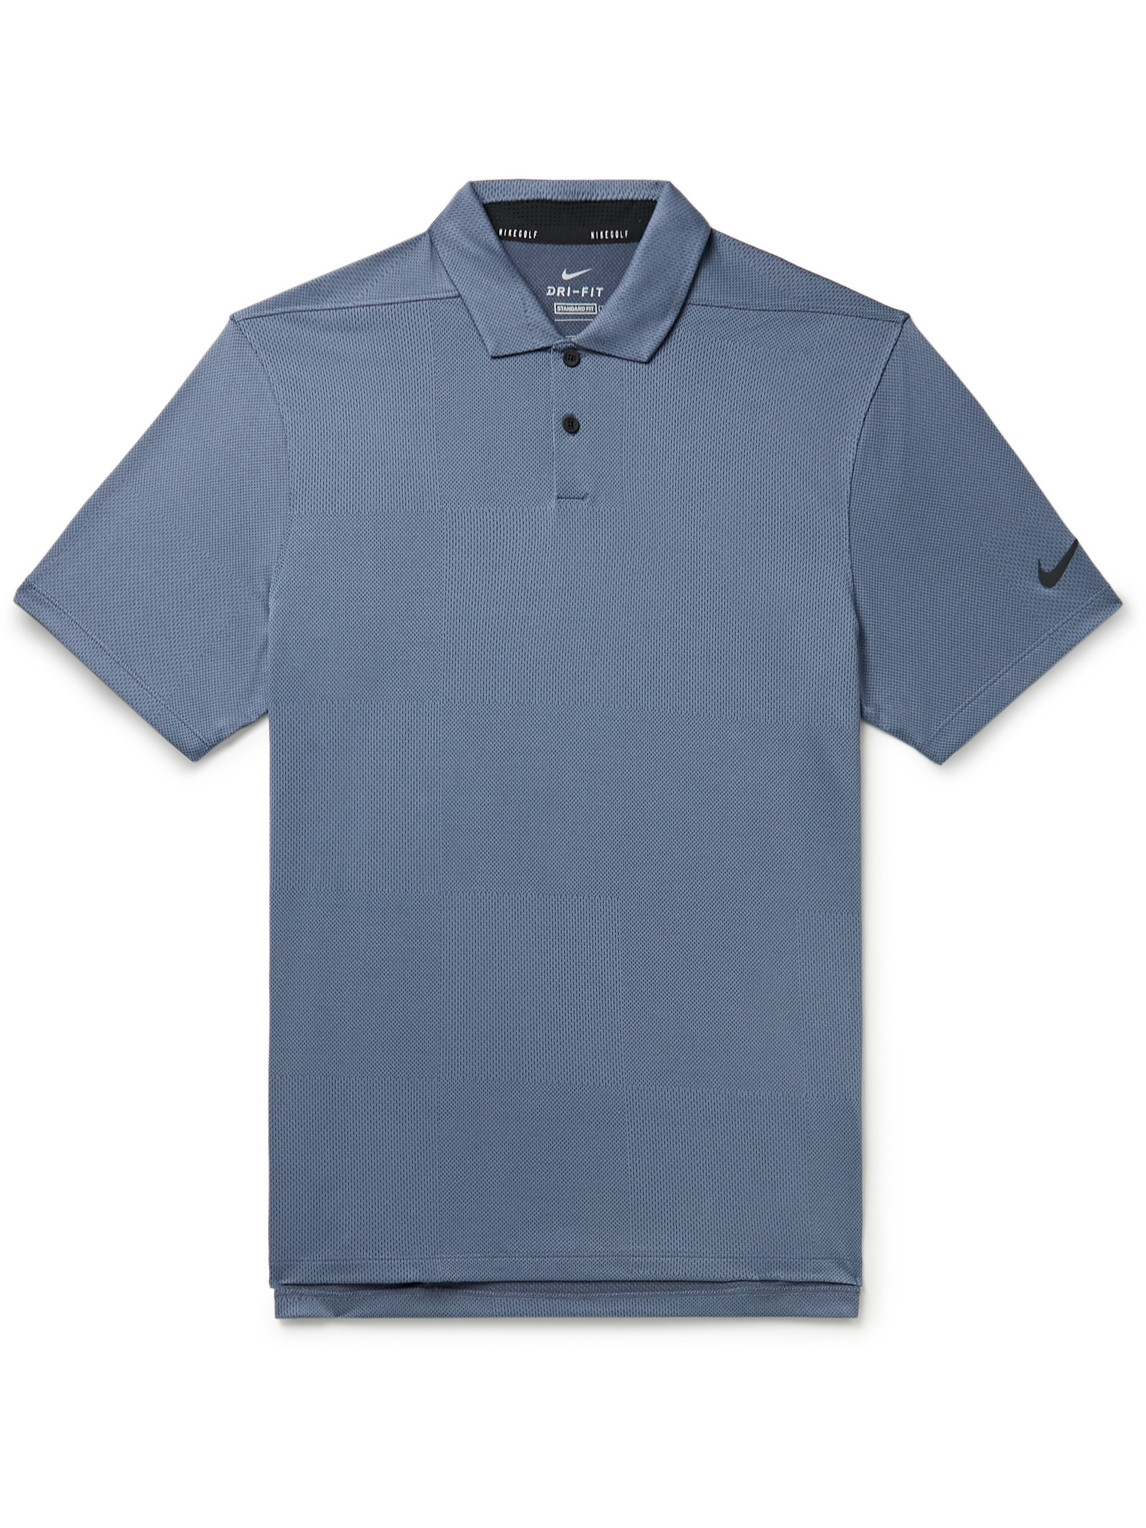 Nike Vapor Dri-fit Jacquard Golf Polo Shirt In Blue